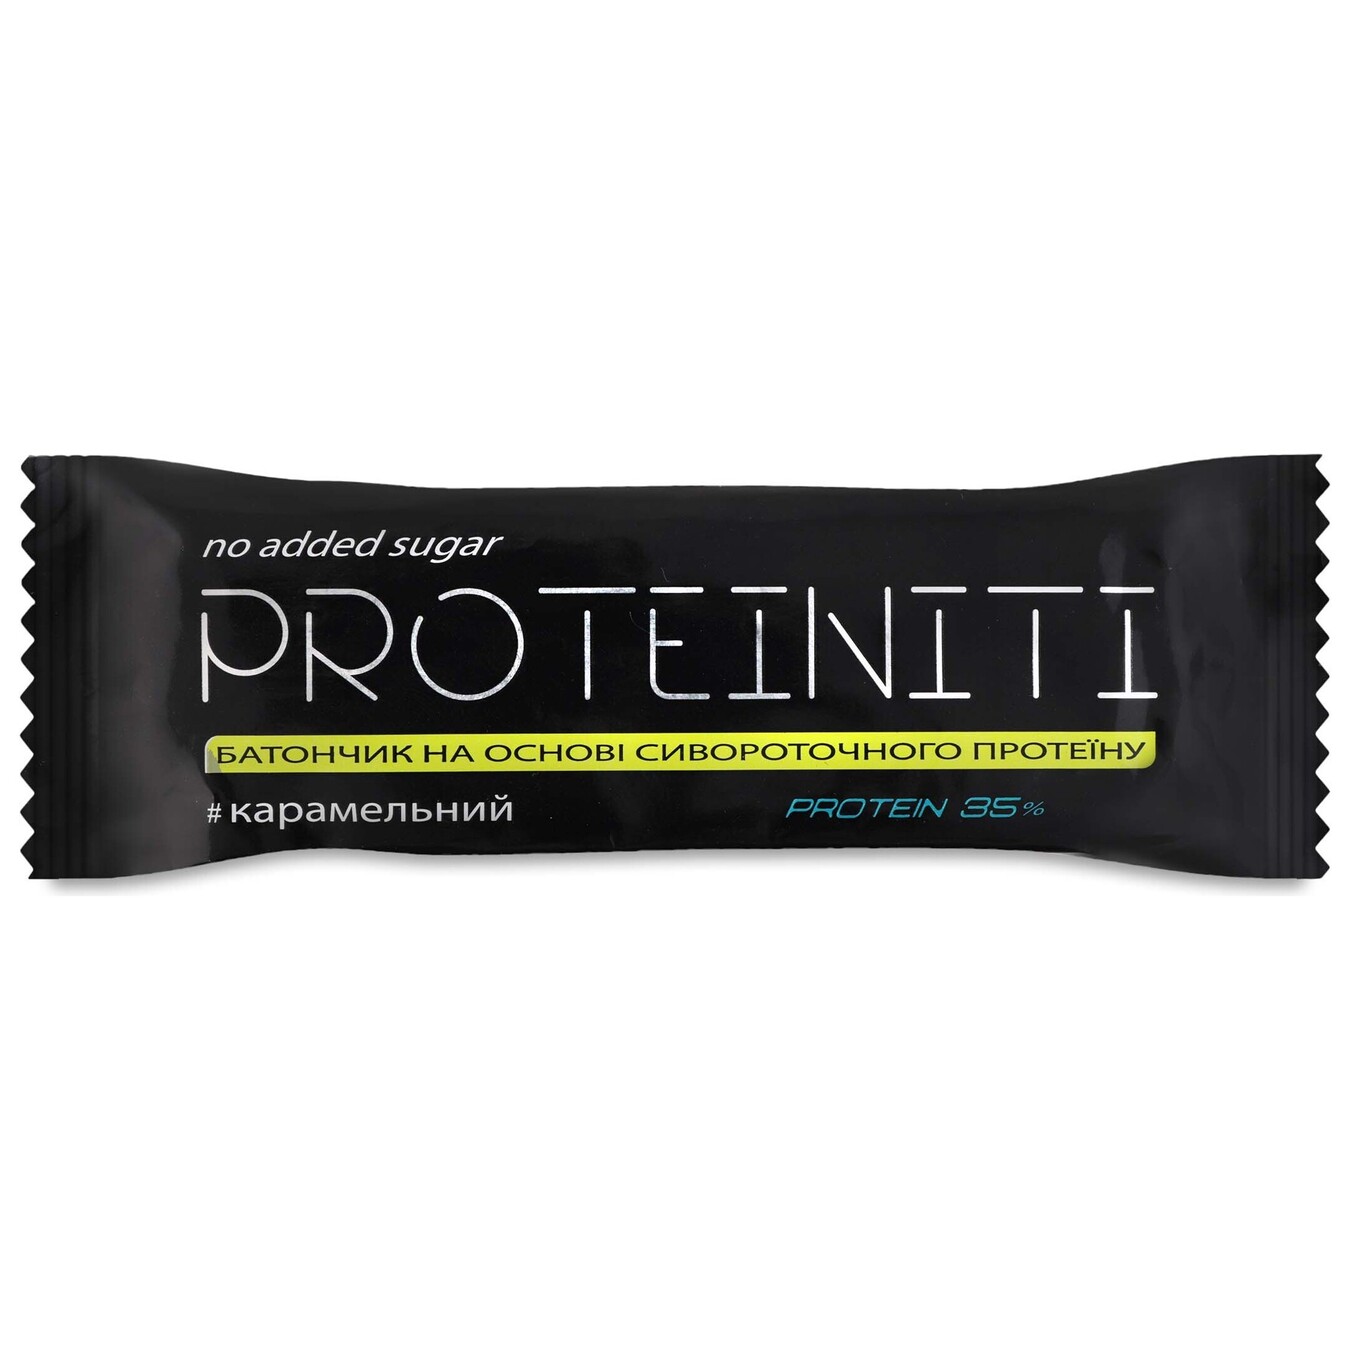 Proteiniti caramel protein bar 40g